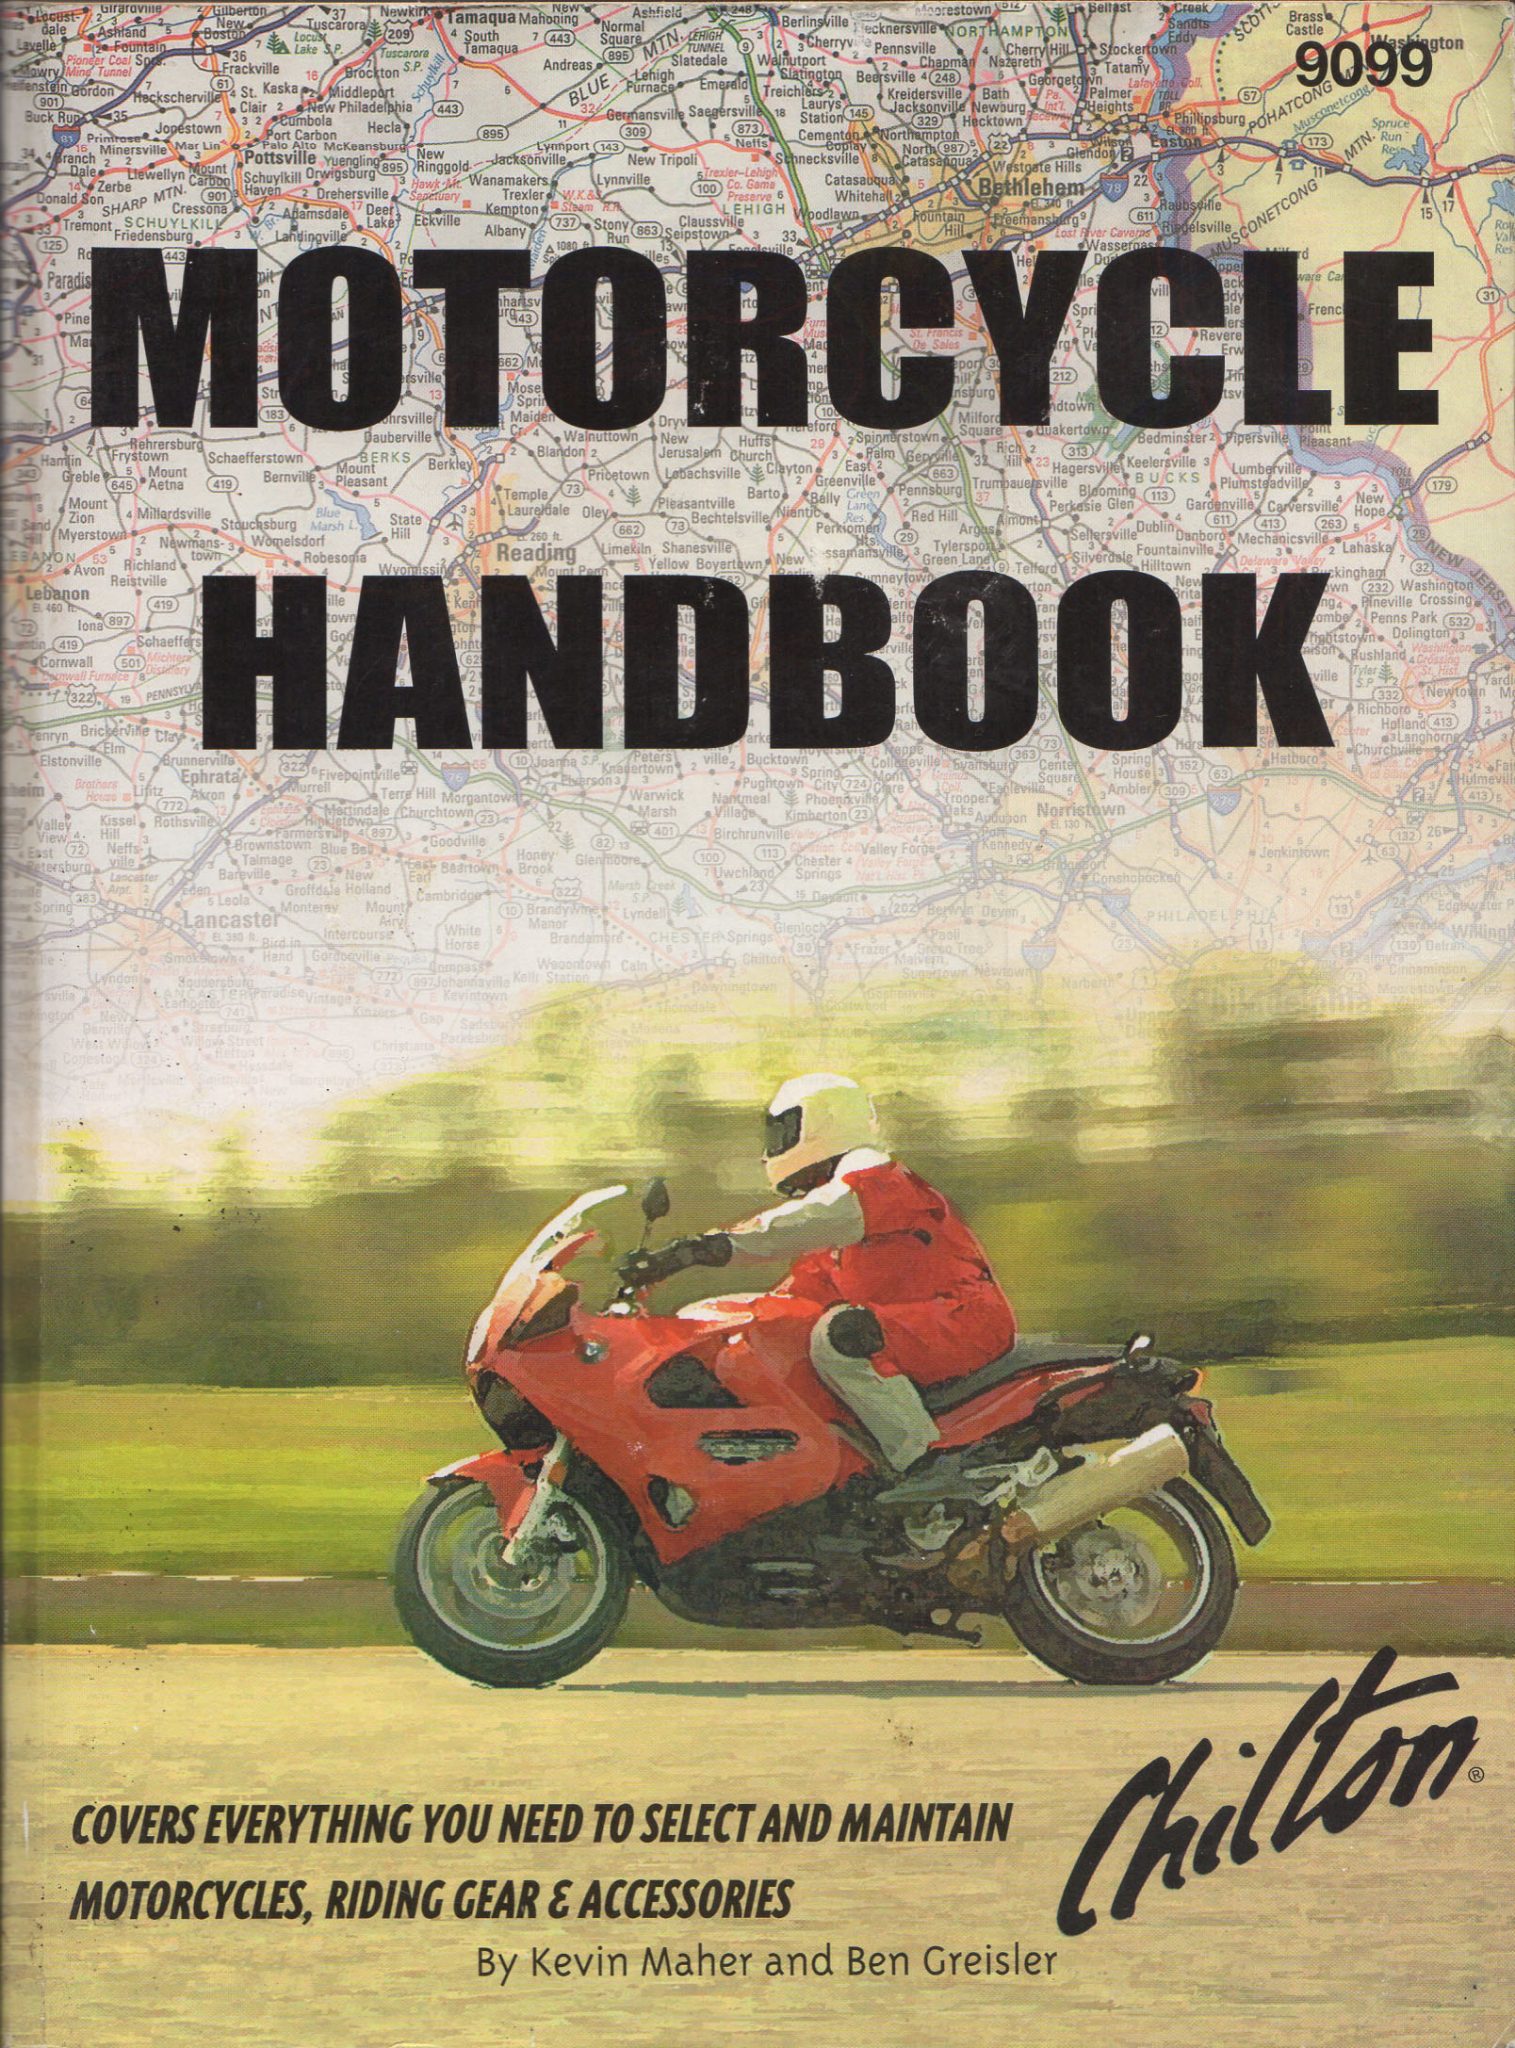 The motorbike book. Книги про Мотоспорт. Байкеры книга